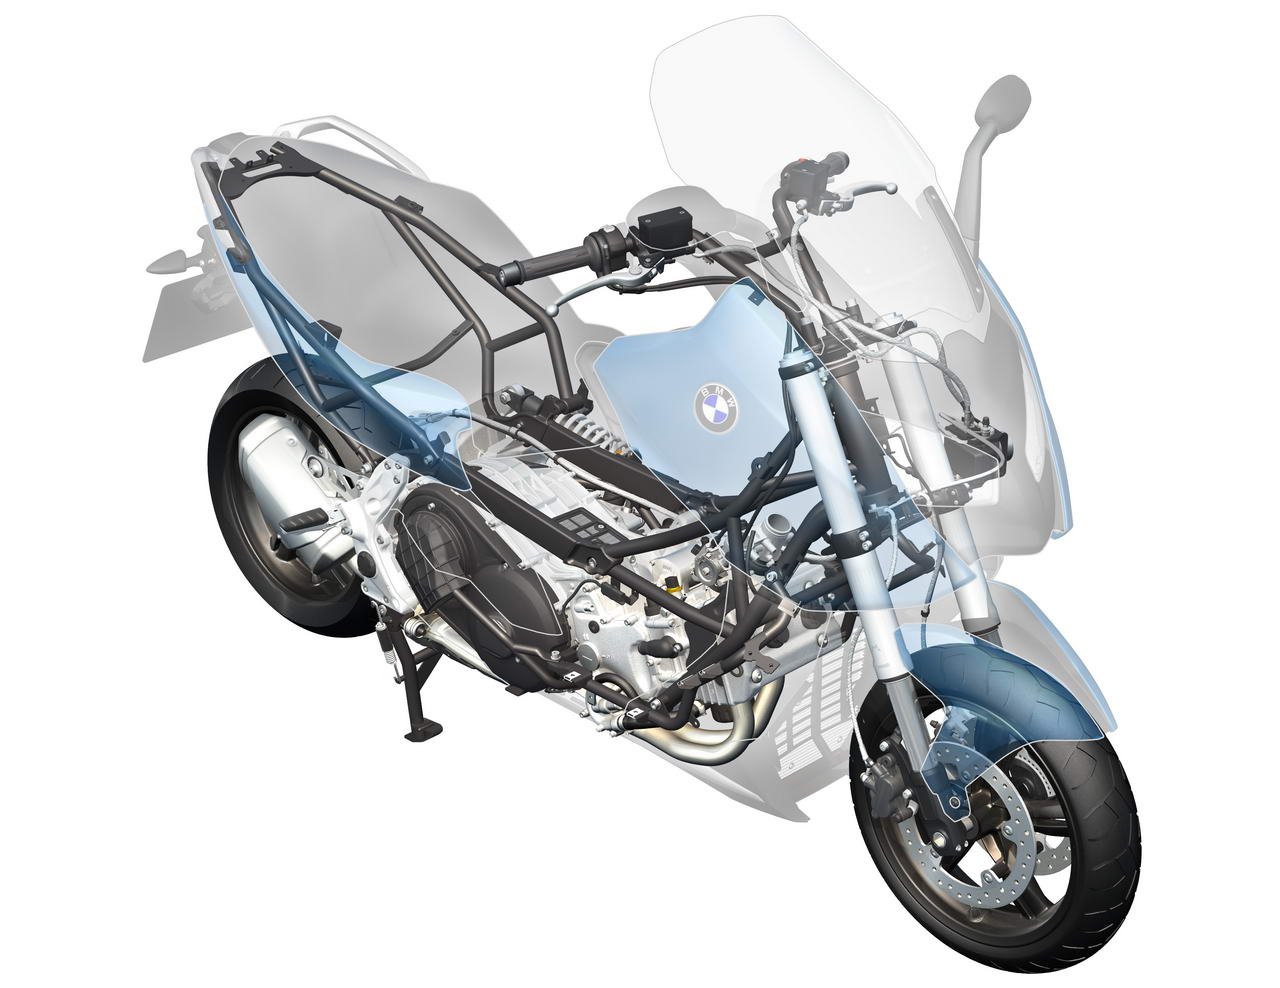 Listino Bmw C600 Sport Scooter oltre 300 - image 14444_bmw-c600sport on https://moto.motori.net